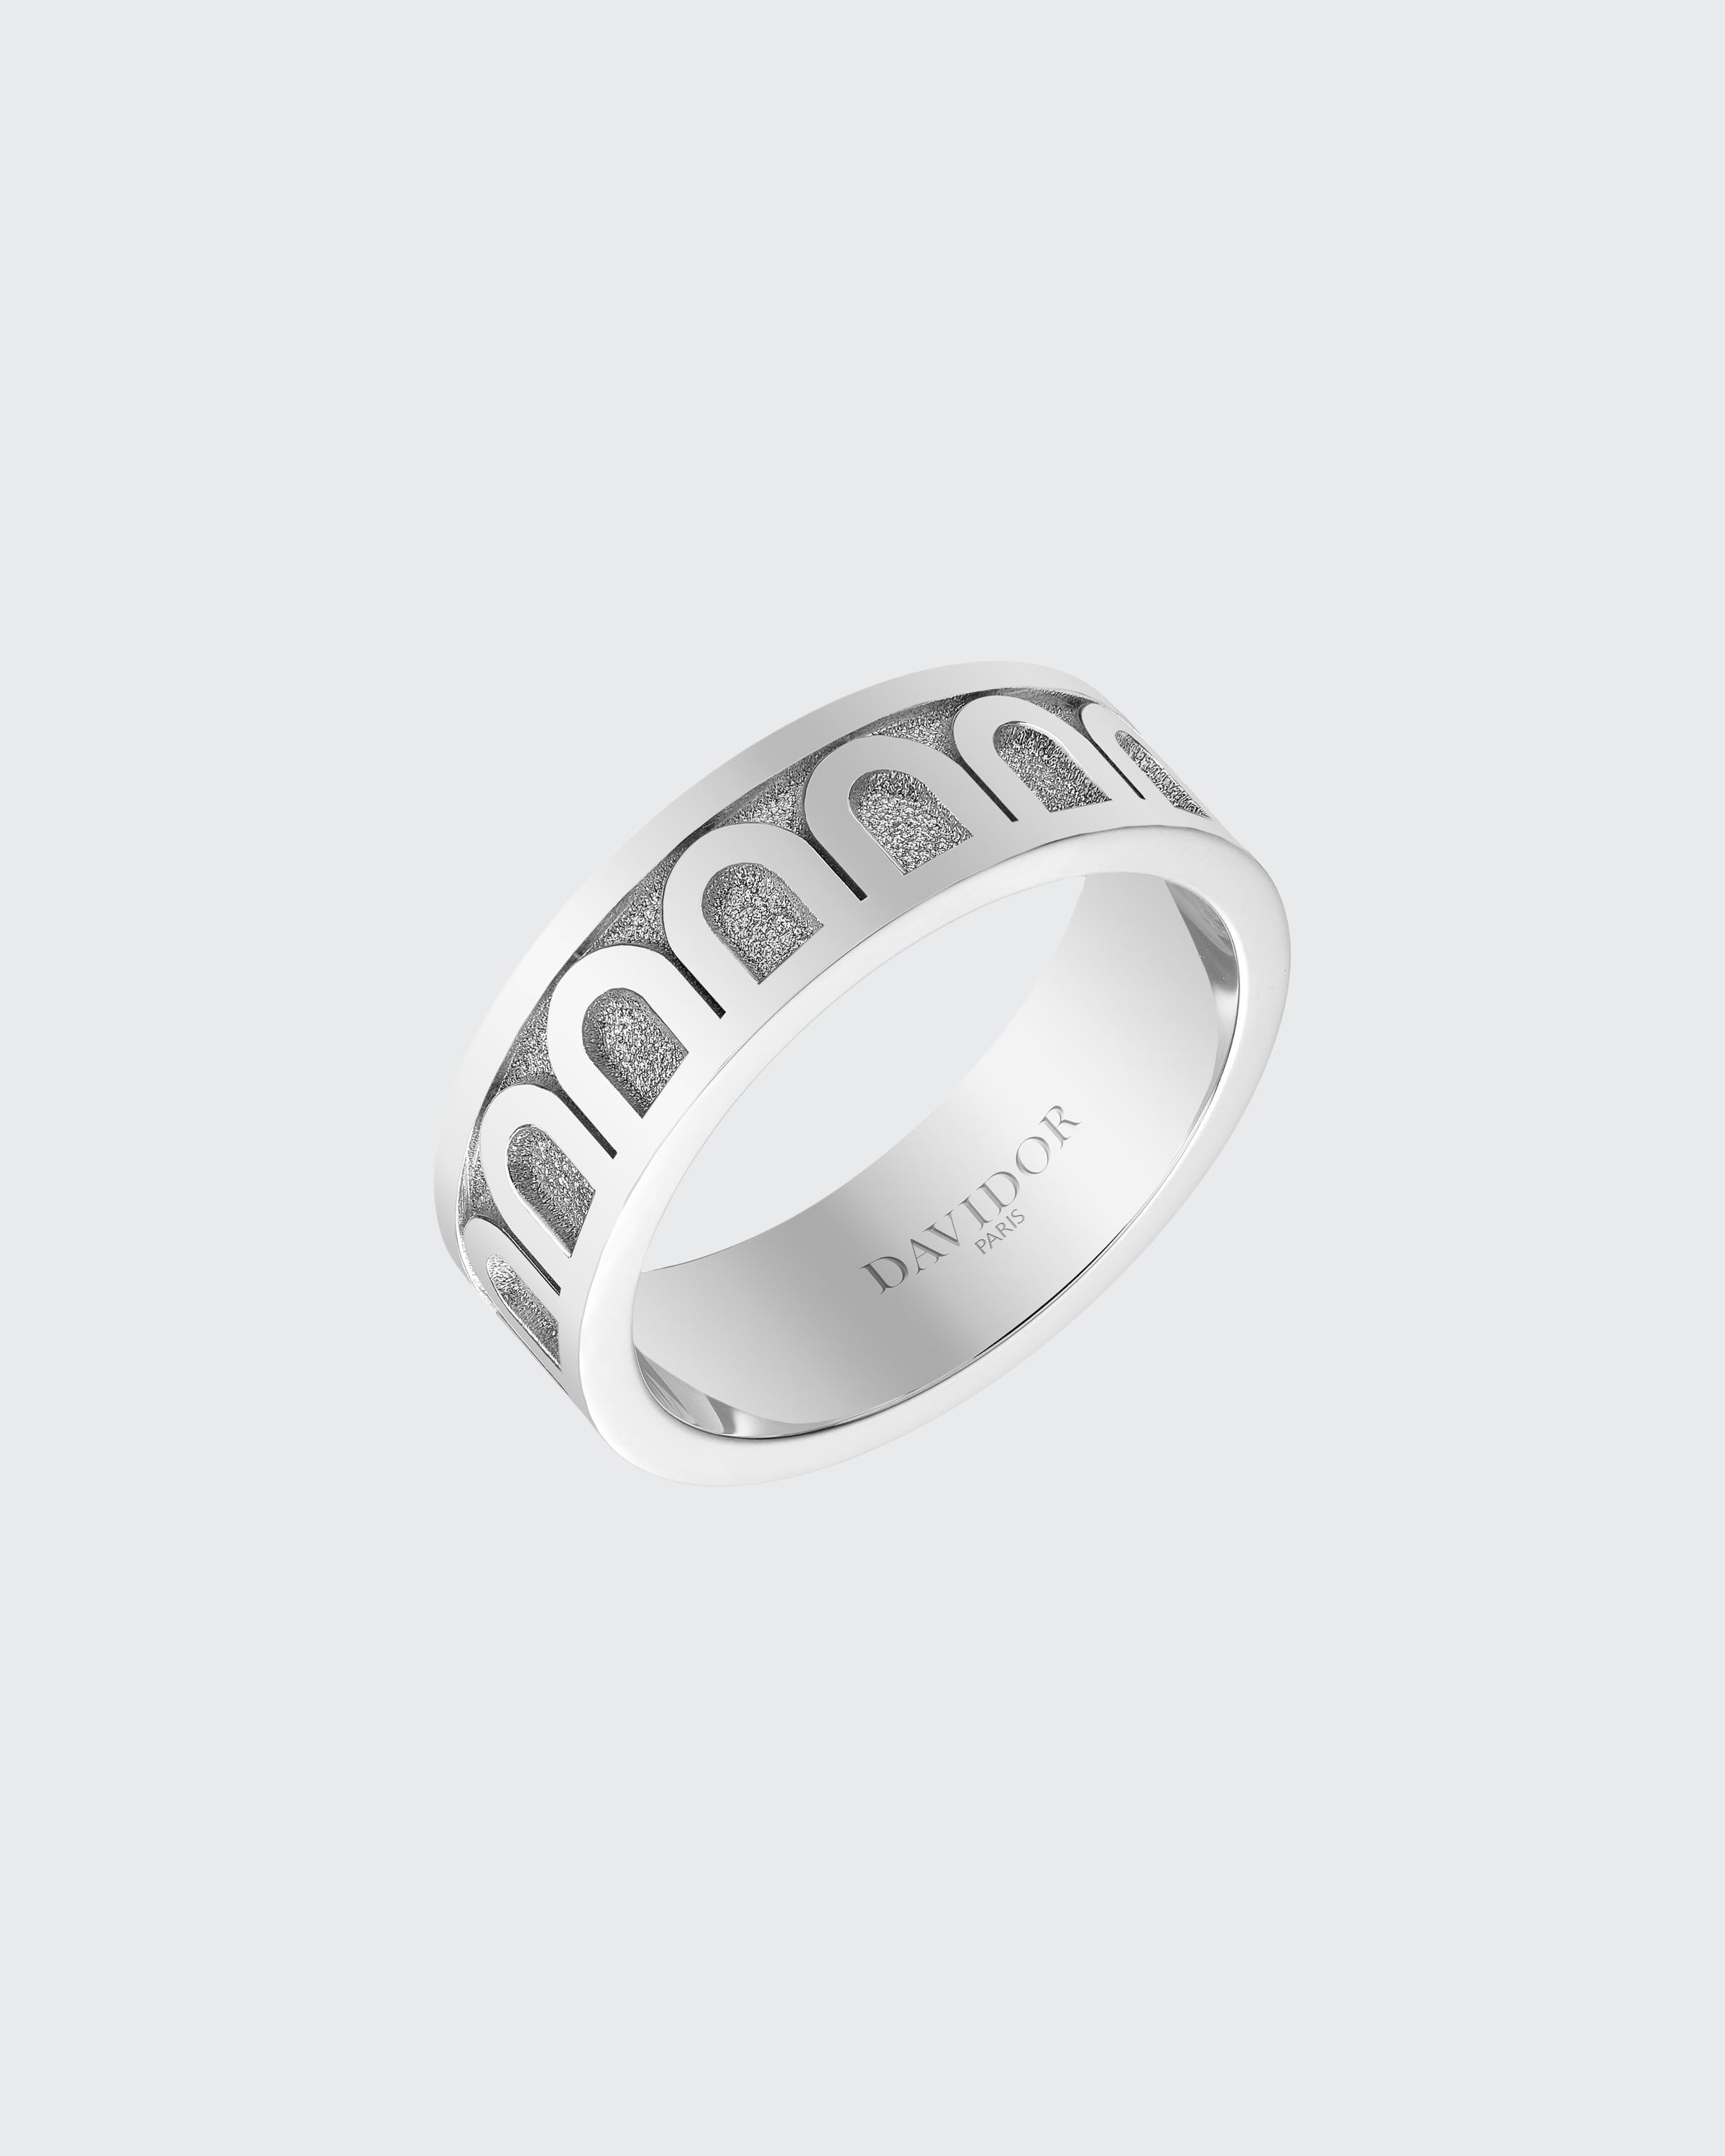 DAVIDOR L'Arc de Davidor 18k White Gold Ring - Med. Model, Sz. 6